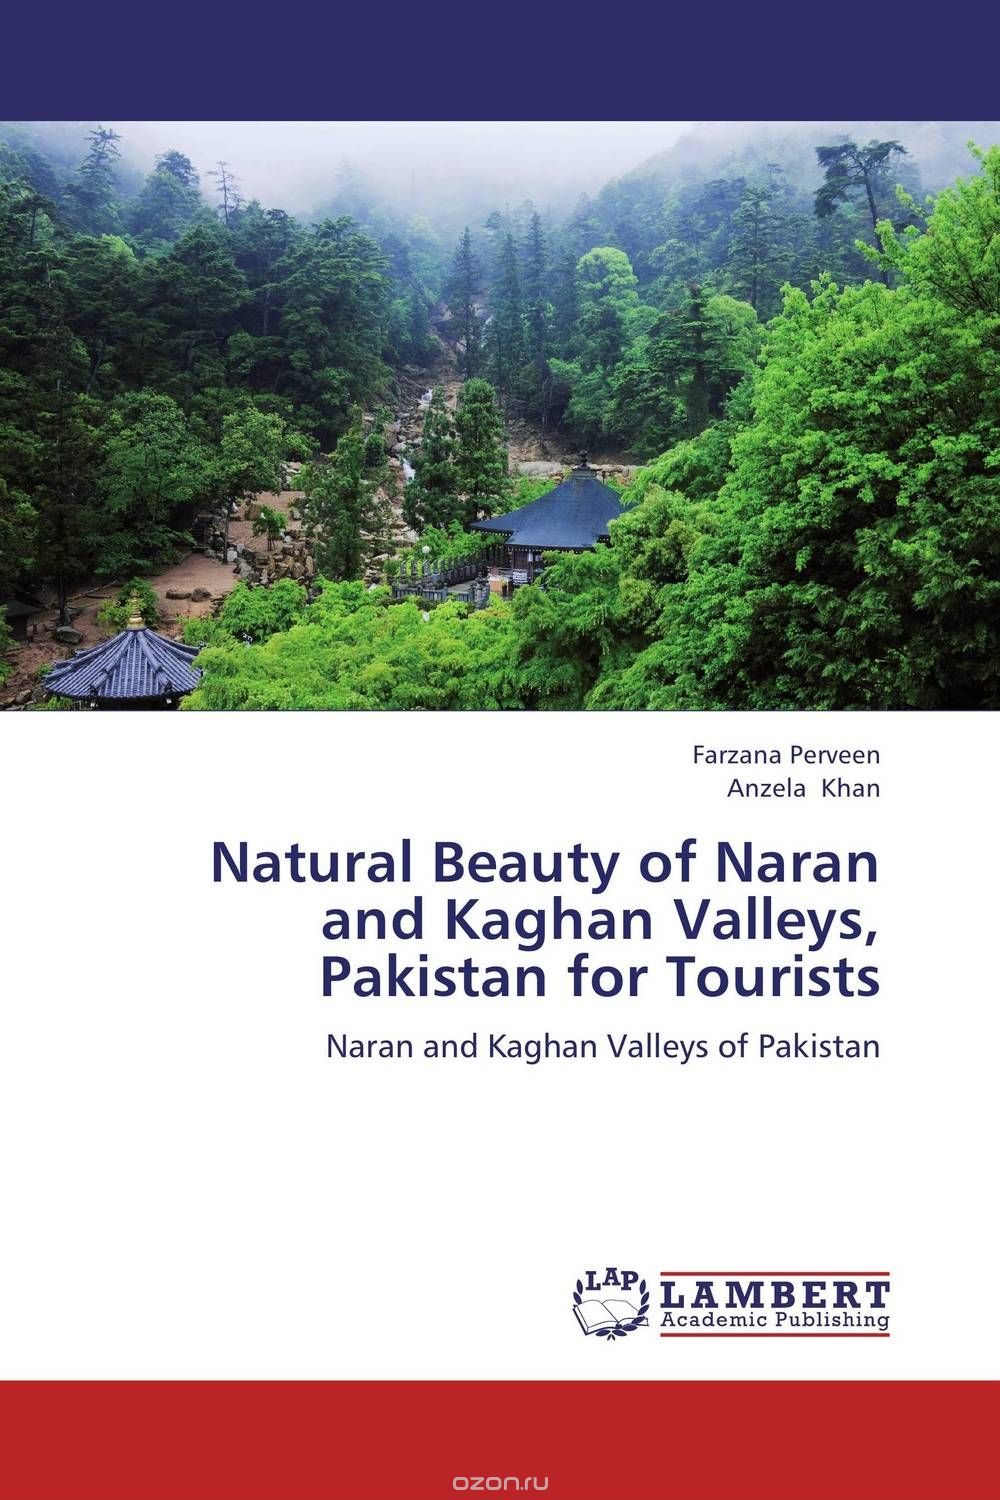 Скачать книгу "Natural Beauty of Naran and Kaghan Valleys, Pakistan for Tourists"